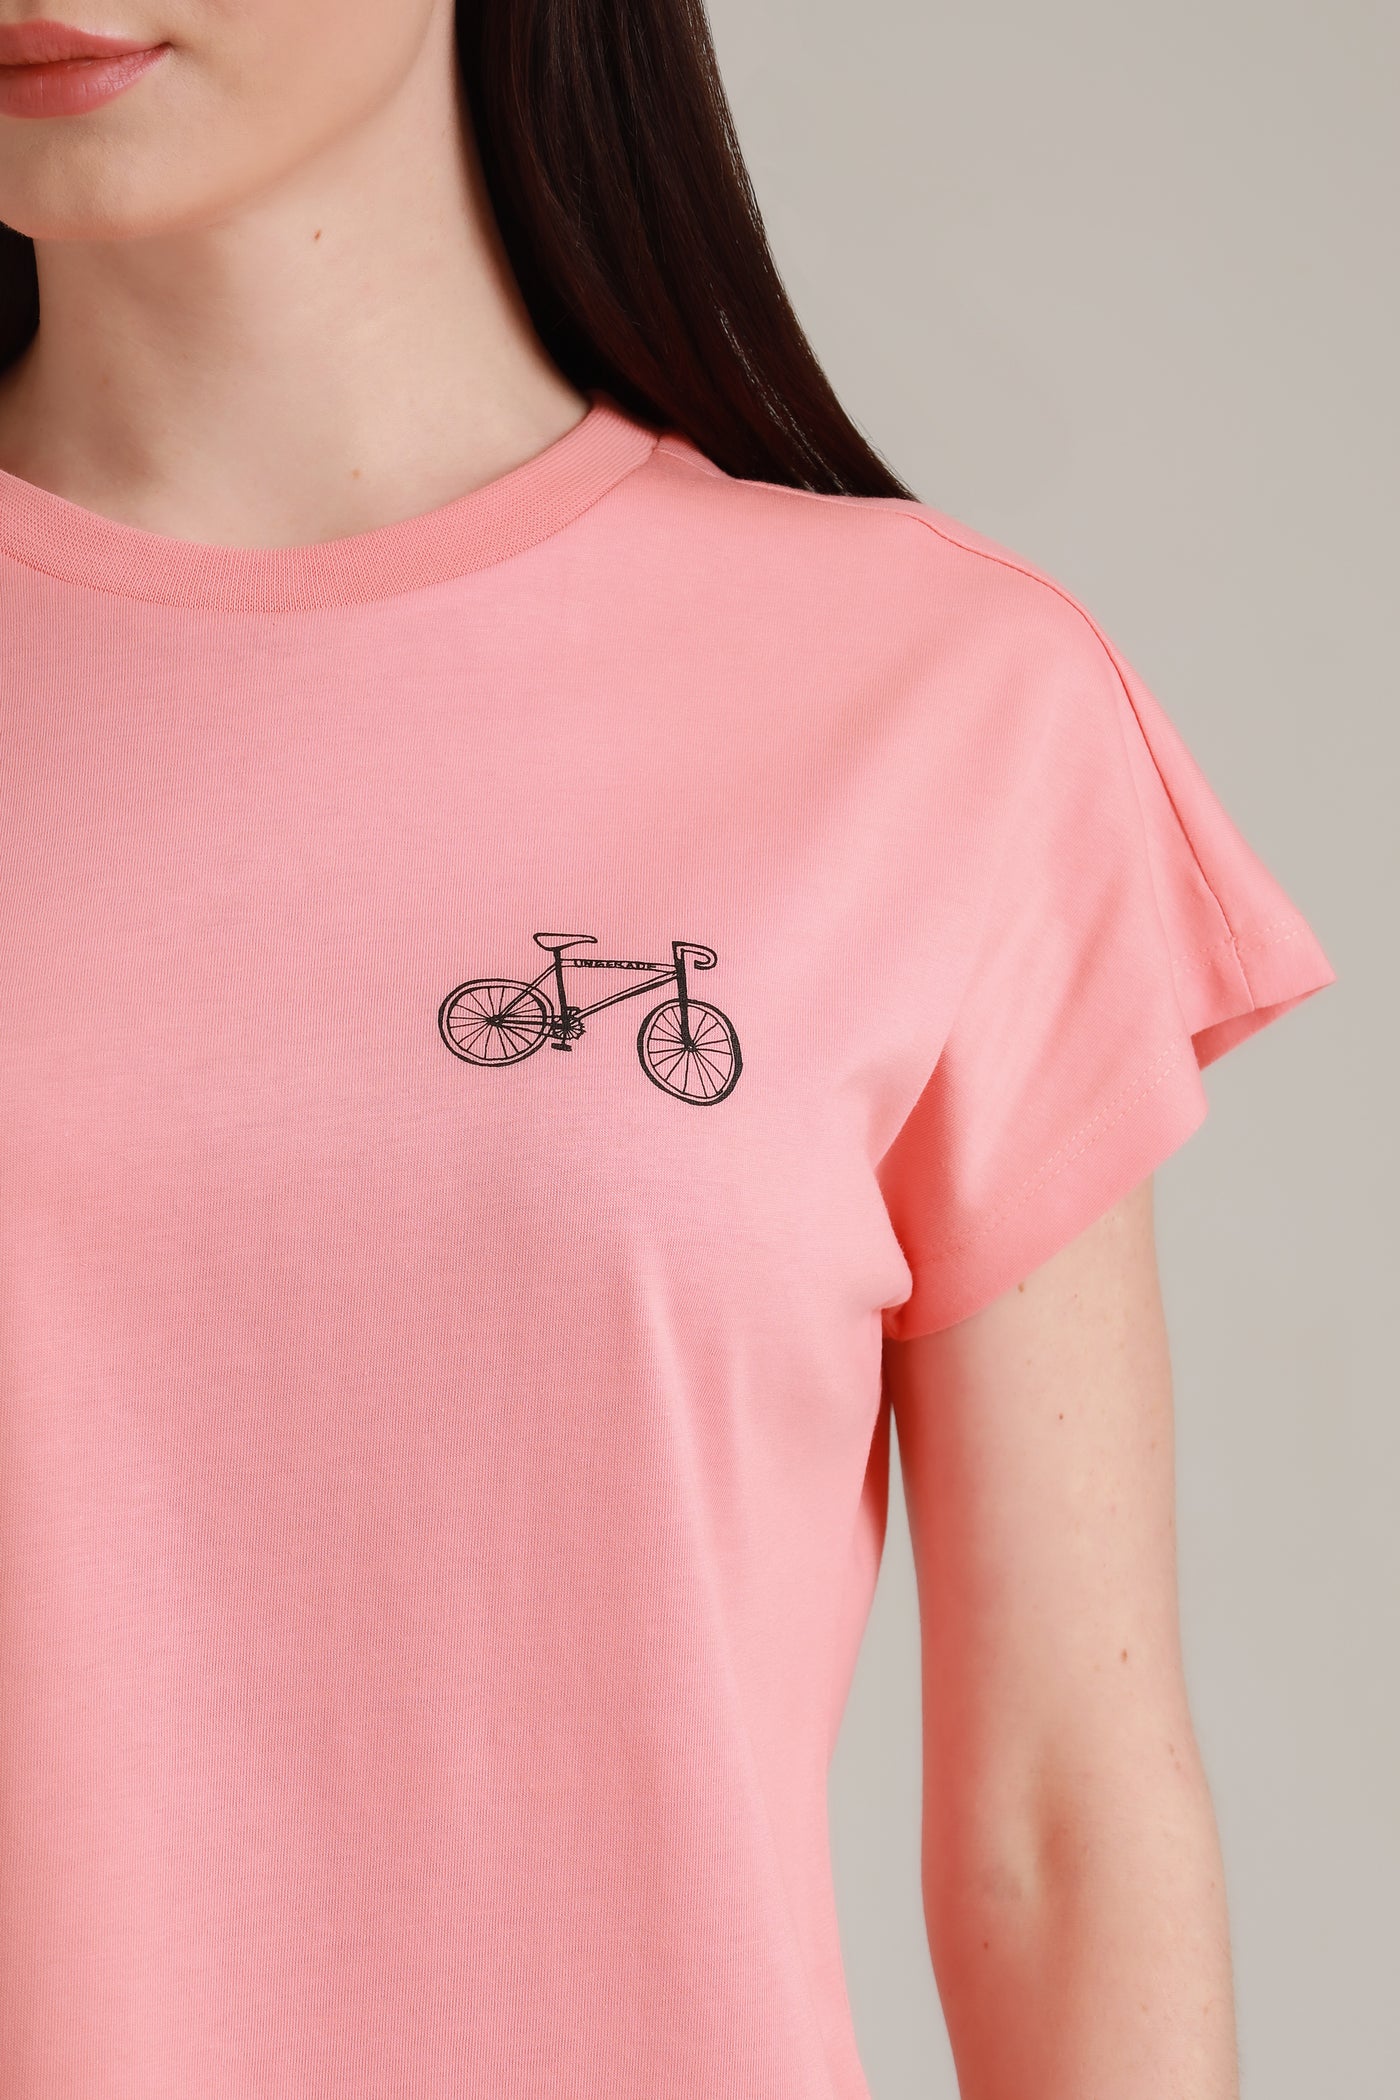 T-Shirt Women Short Sleeves Bike Burnt Coral